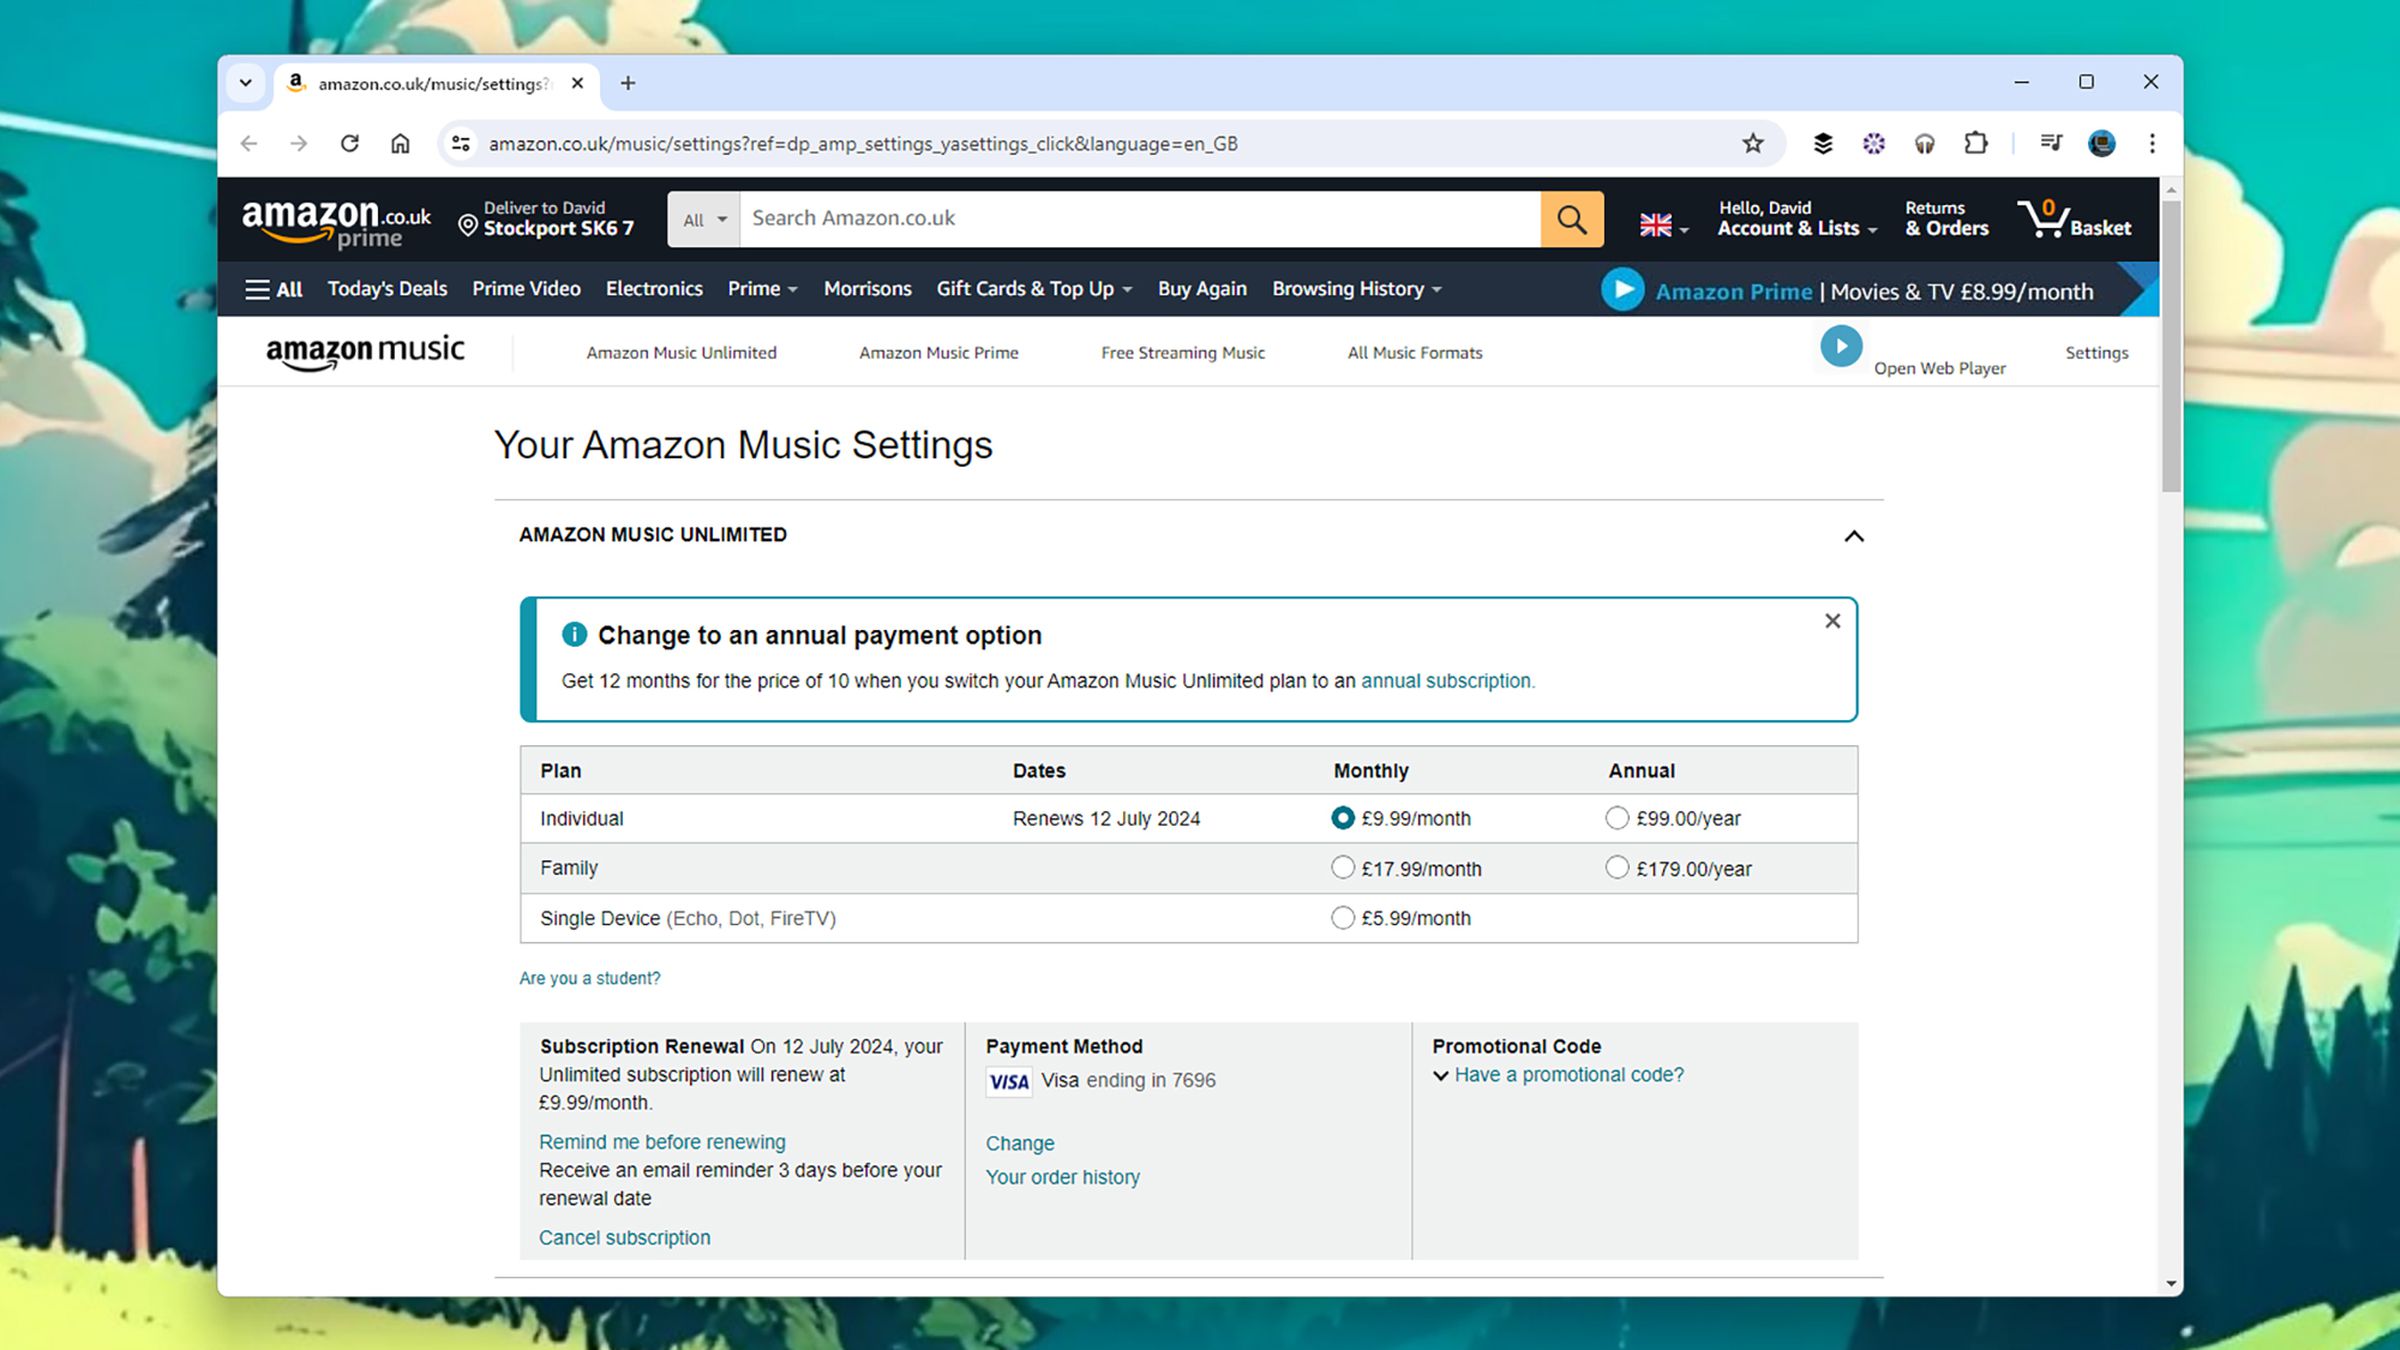 Amazon web page with Amazon Music settings.